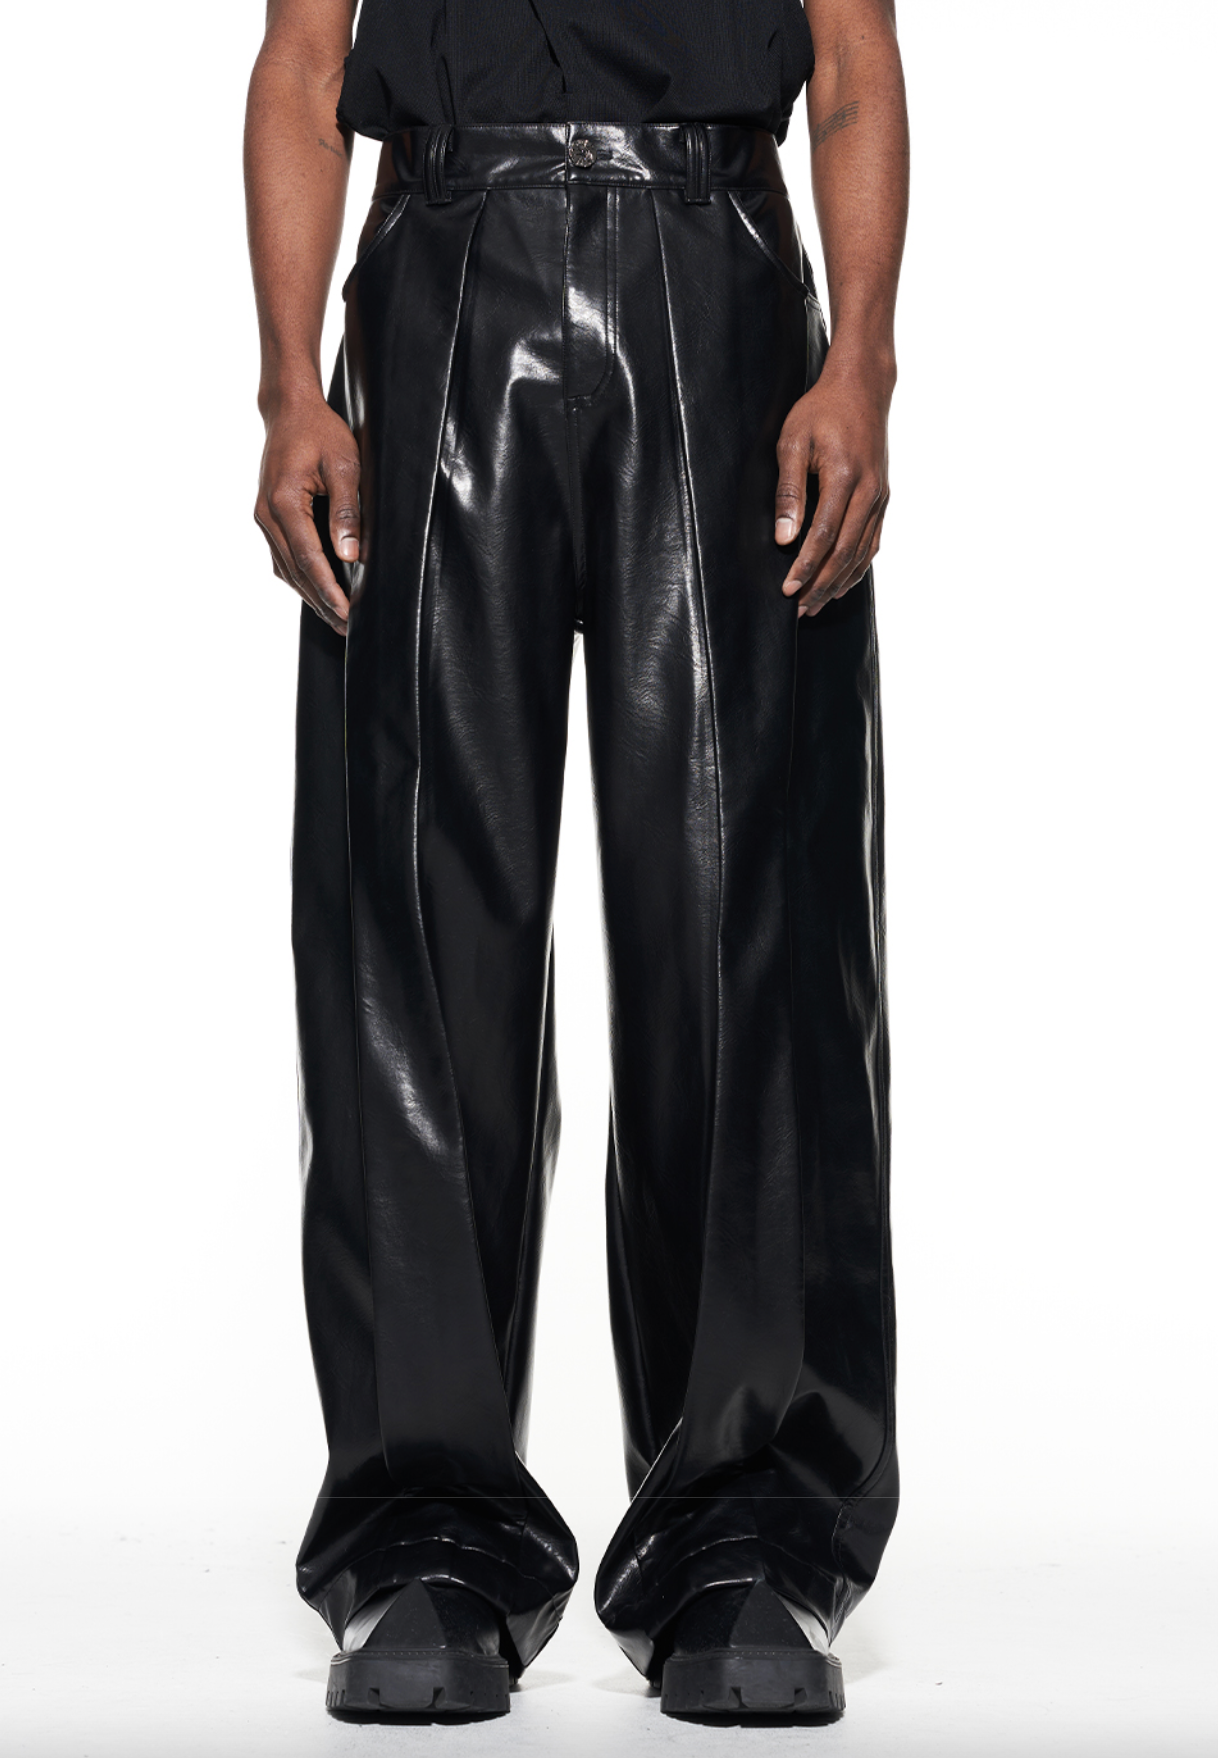 pushBUTTON Black Leather Panty Line Straight Denim Jeans